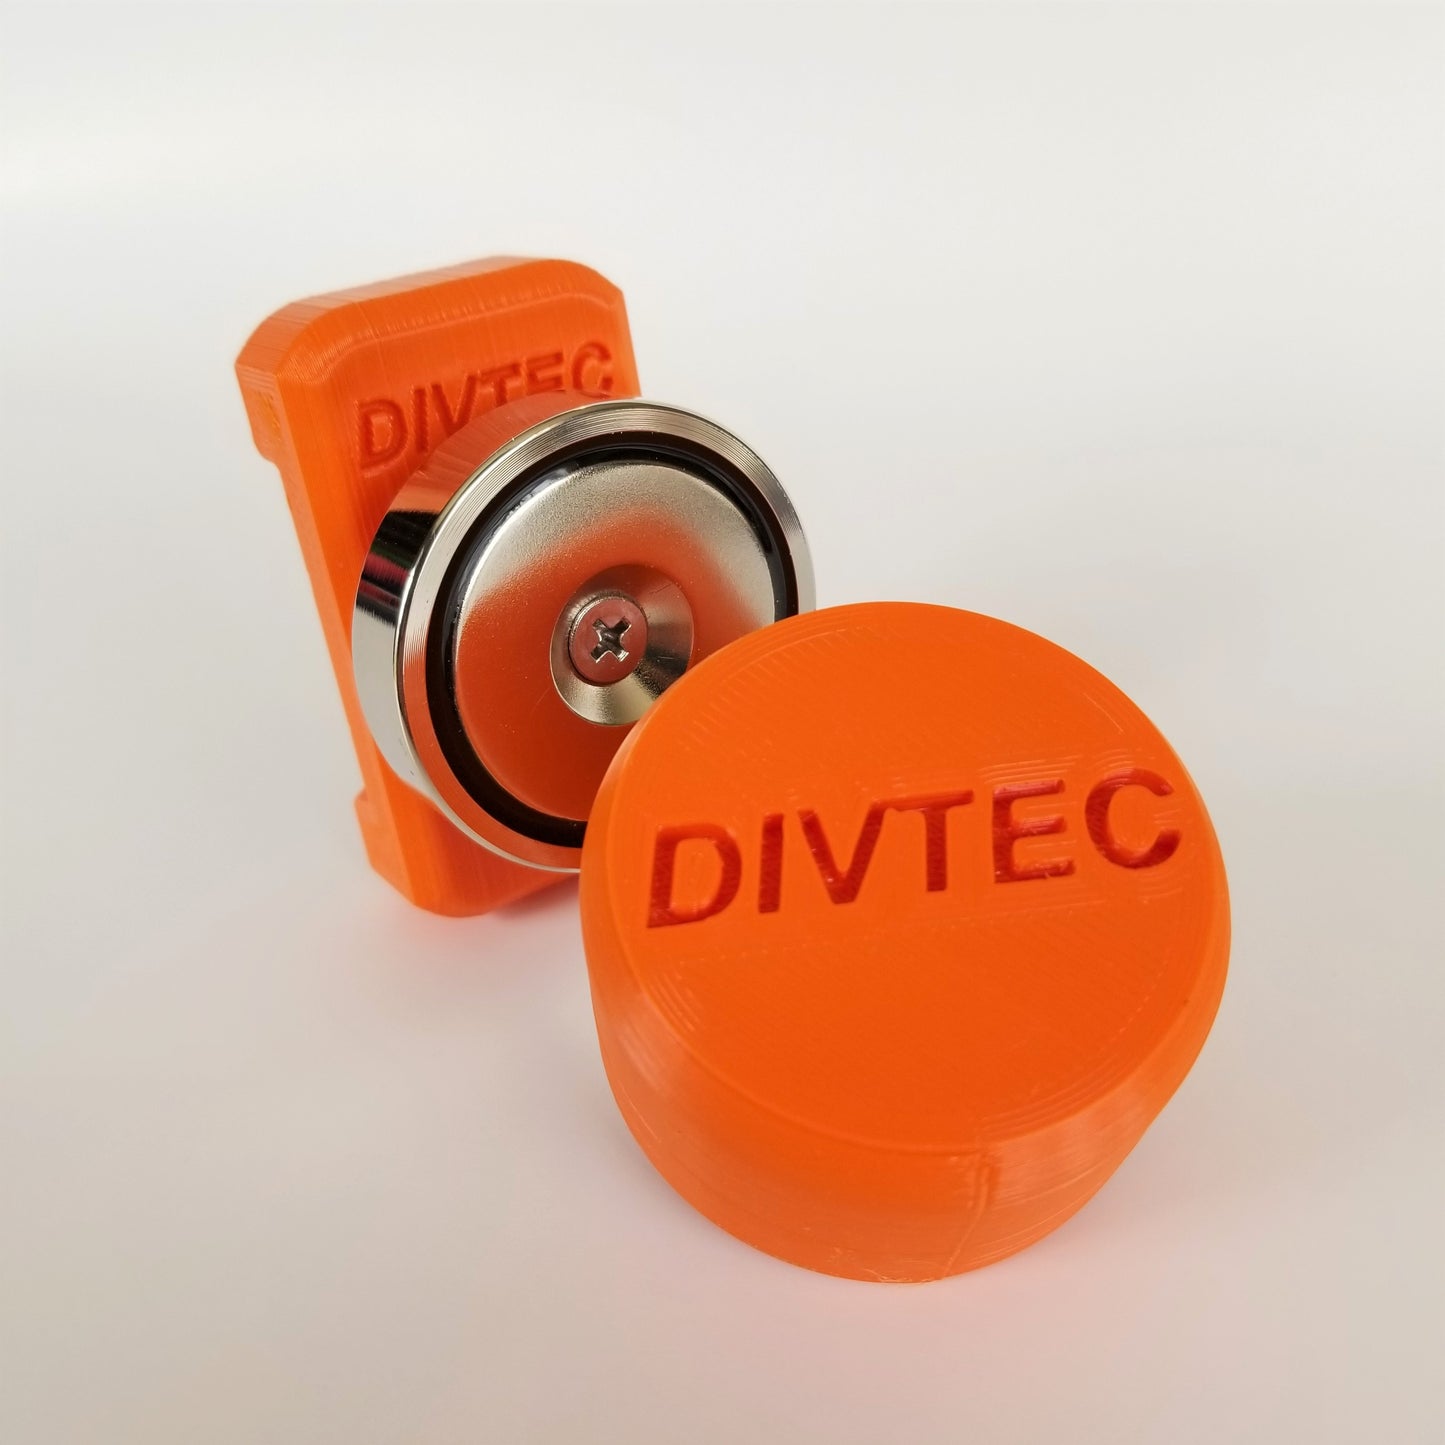 Divtec Magnetic Magazine Pouch with Cap - Select Color